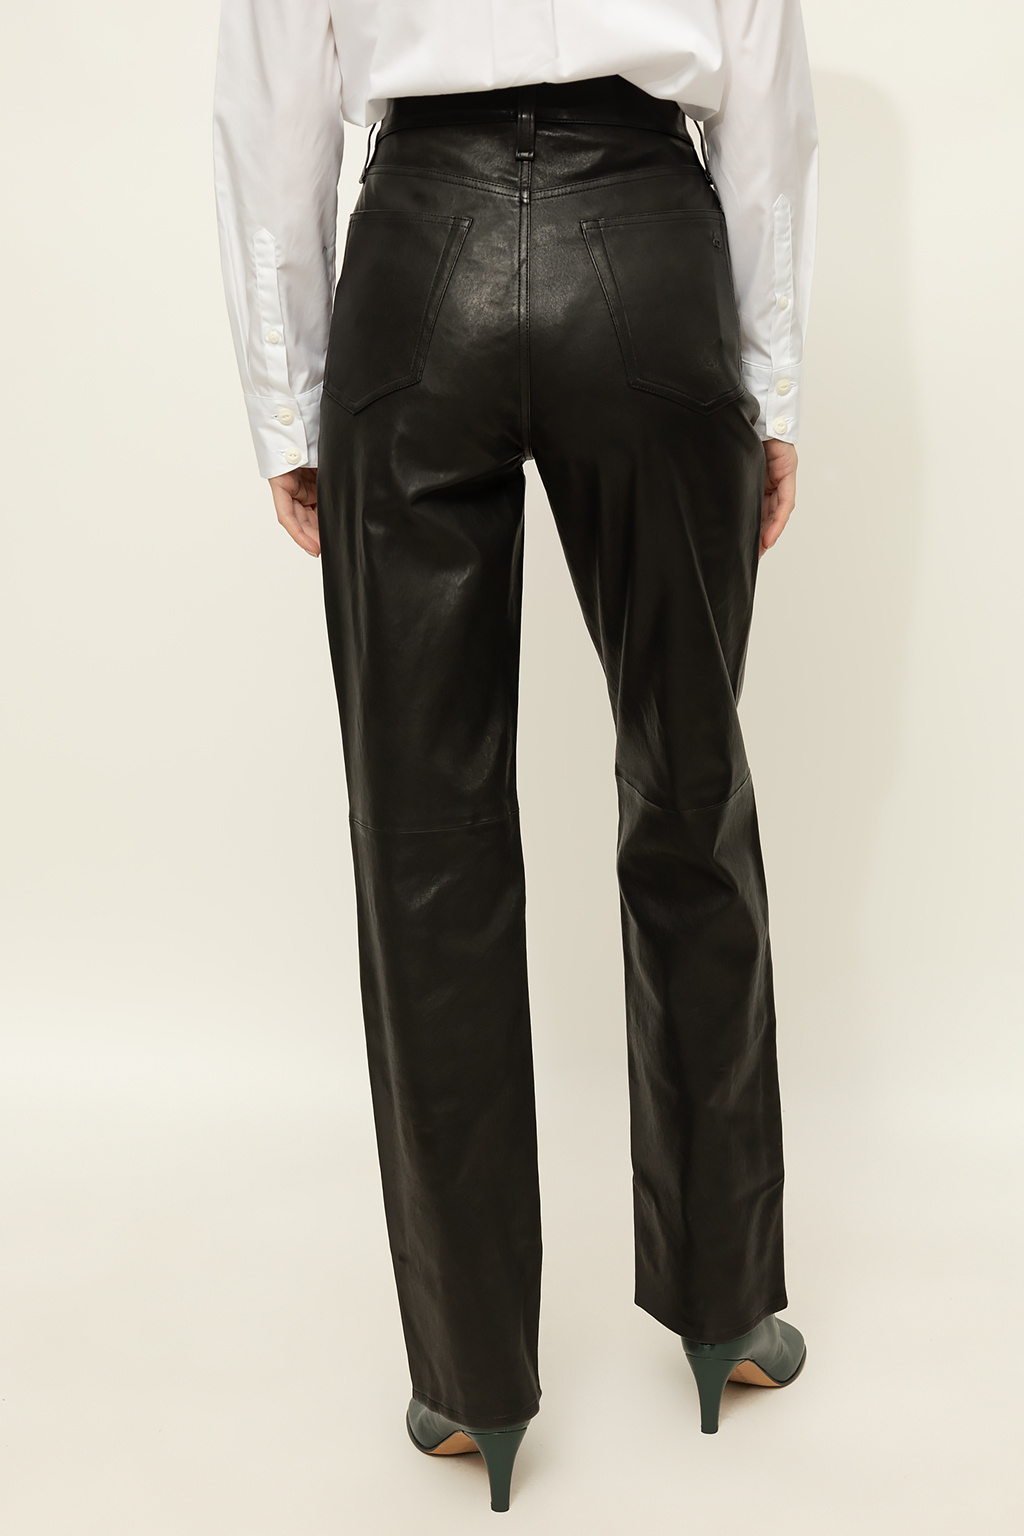 Rag & Bone  ‘Alex’ leather amp trousers